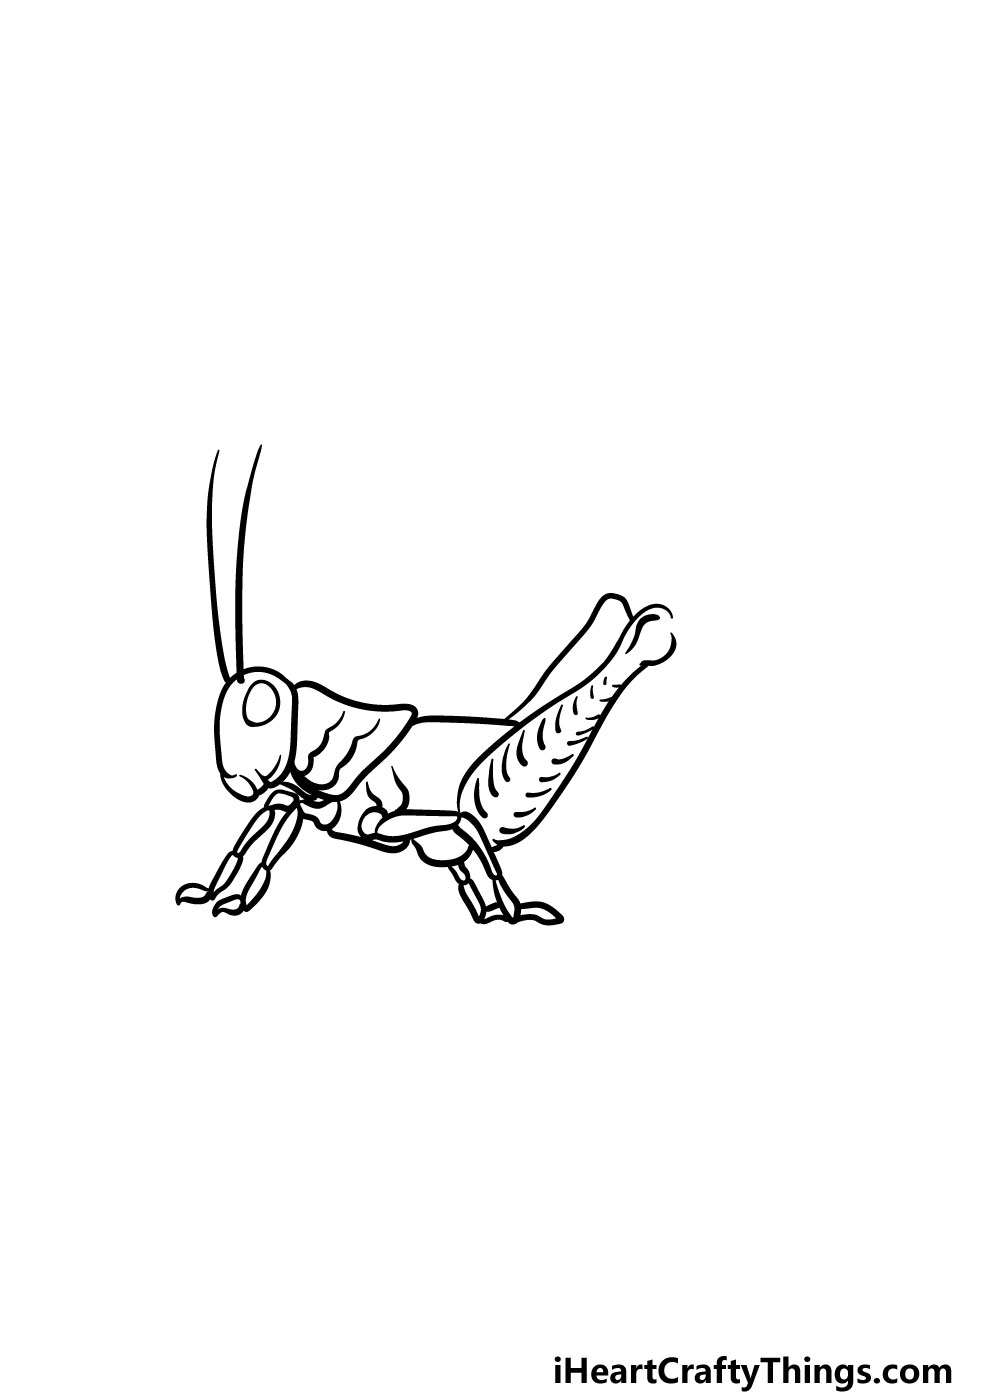 drawing a grasshopper step 4